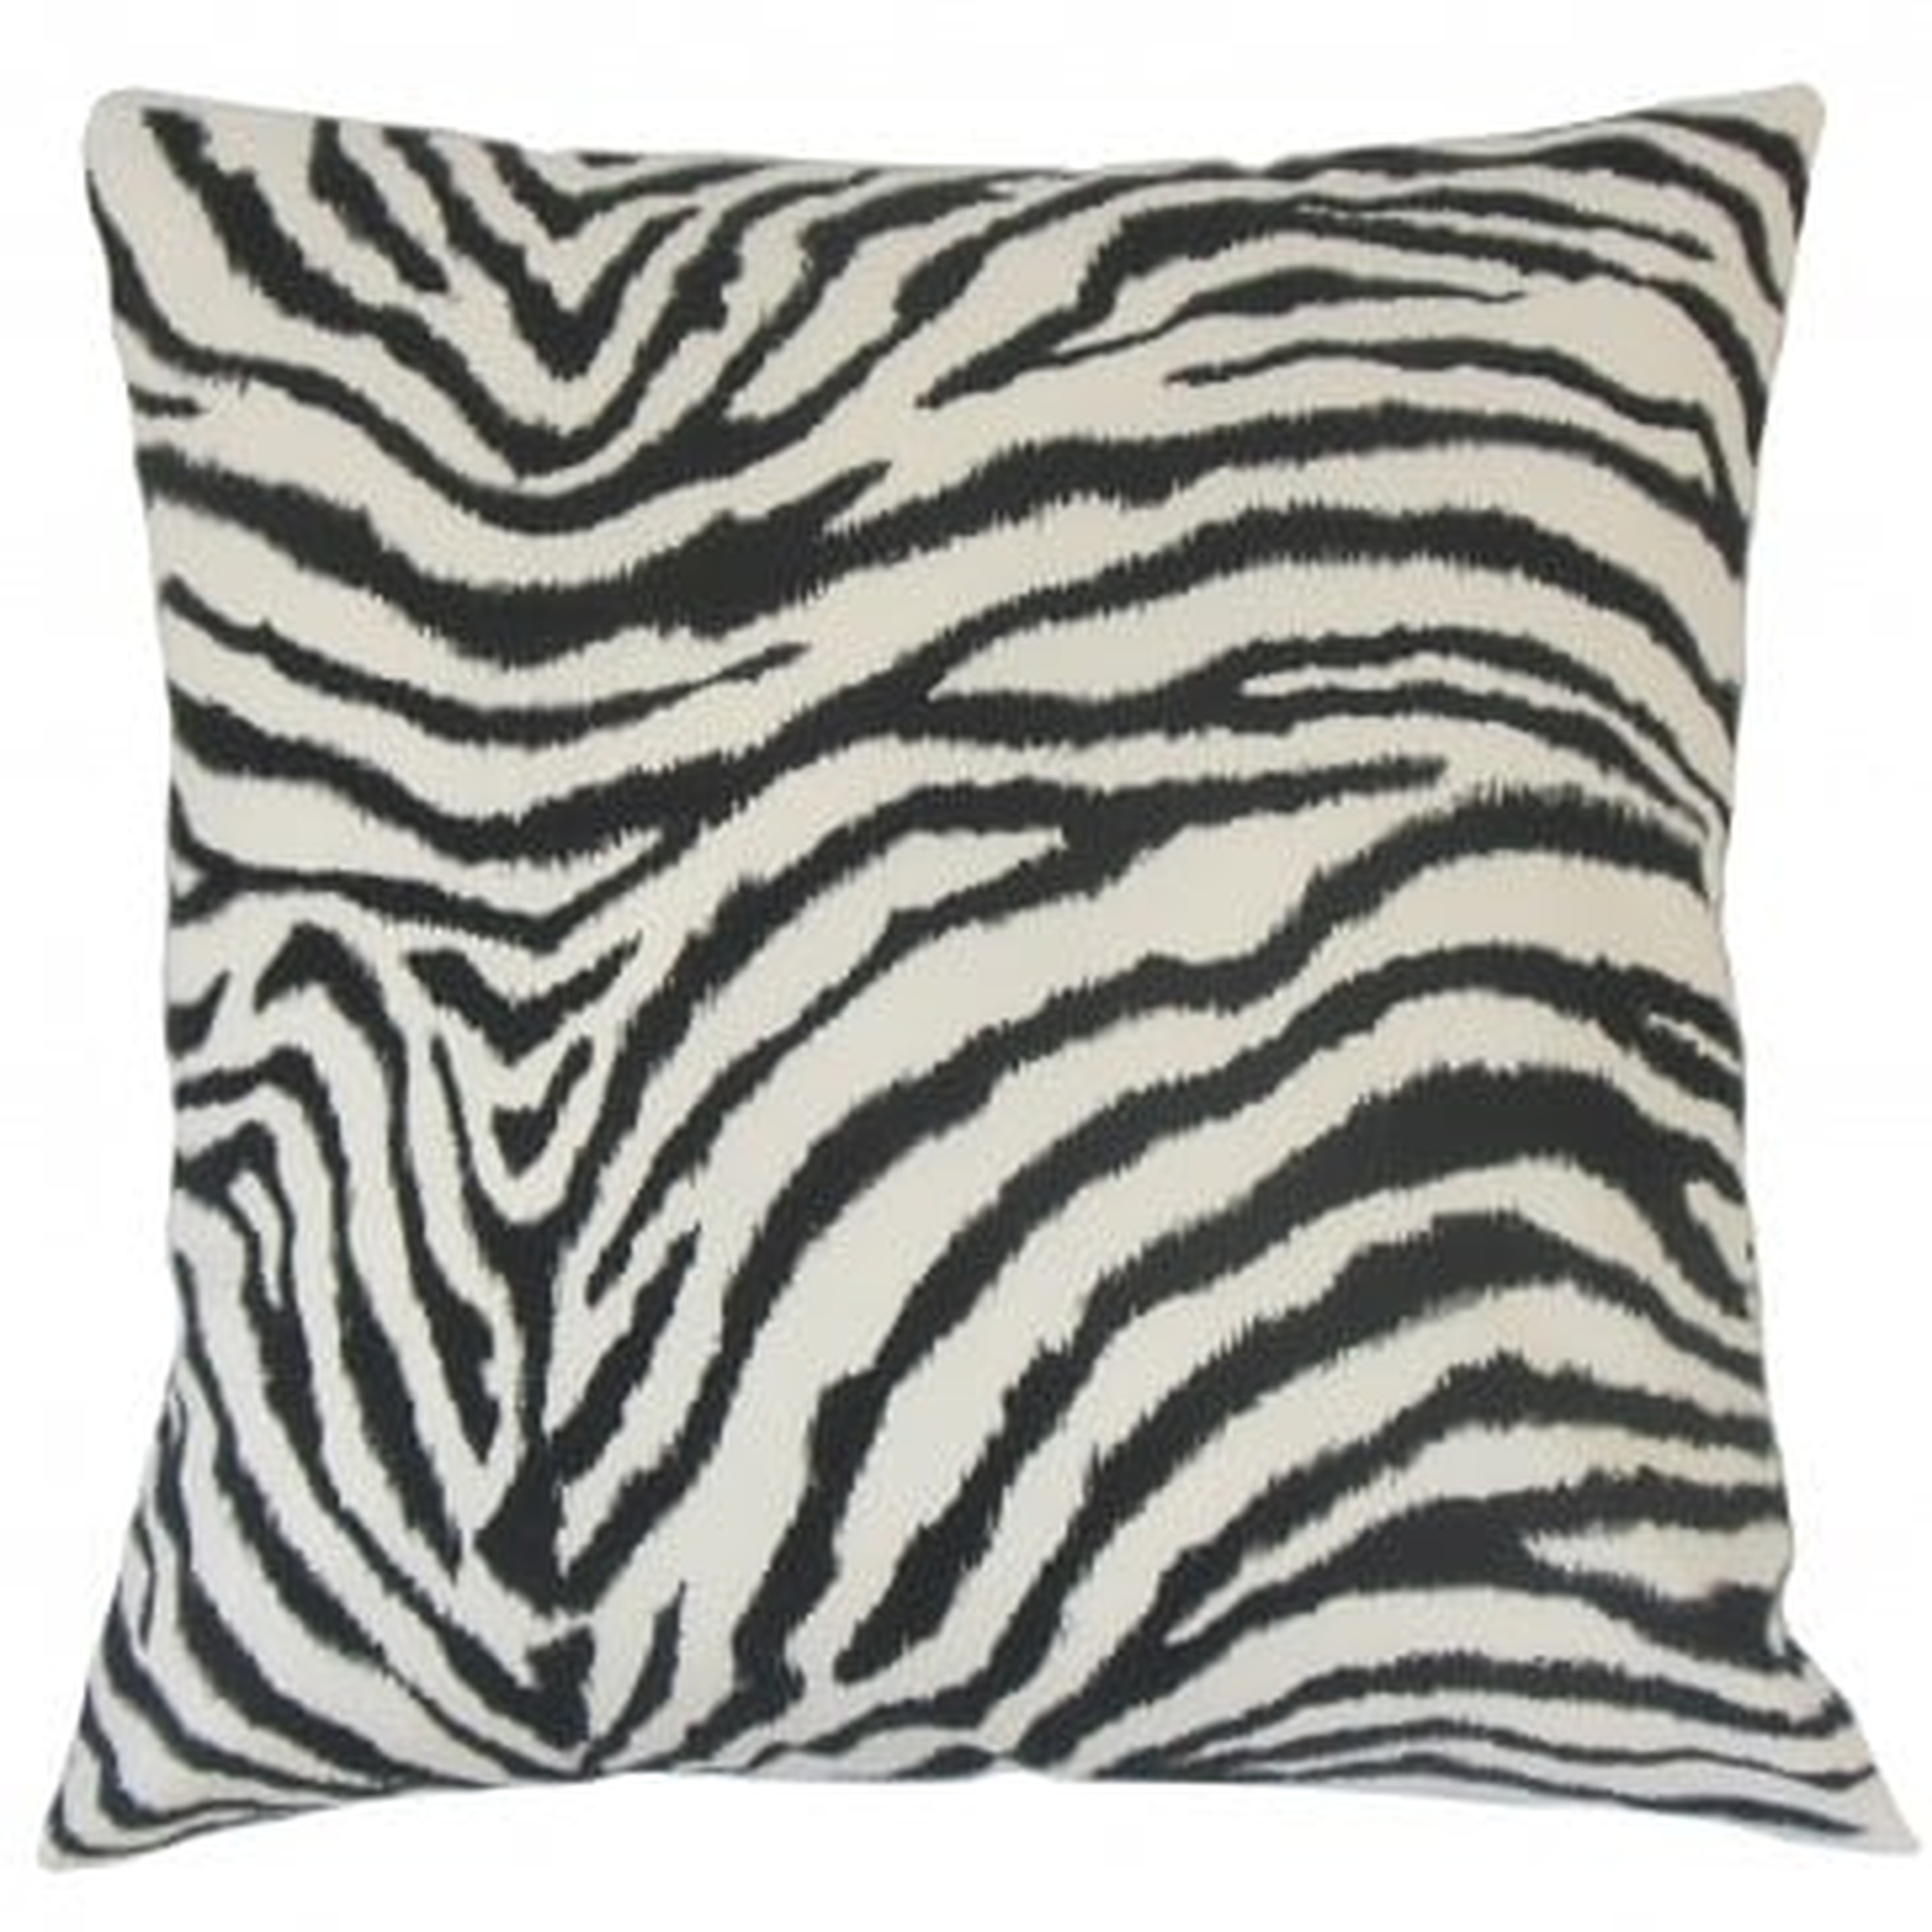 Wassameh Animal Print Pillow Black White -18" x 18" - Insert included - Linen & Seam